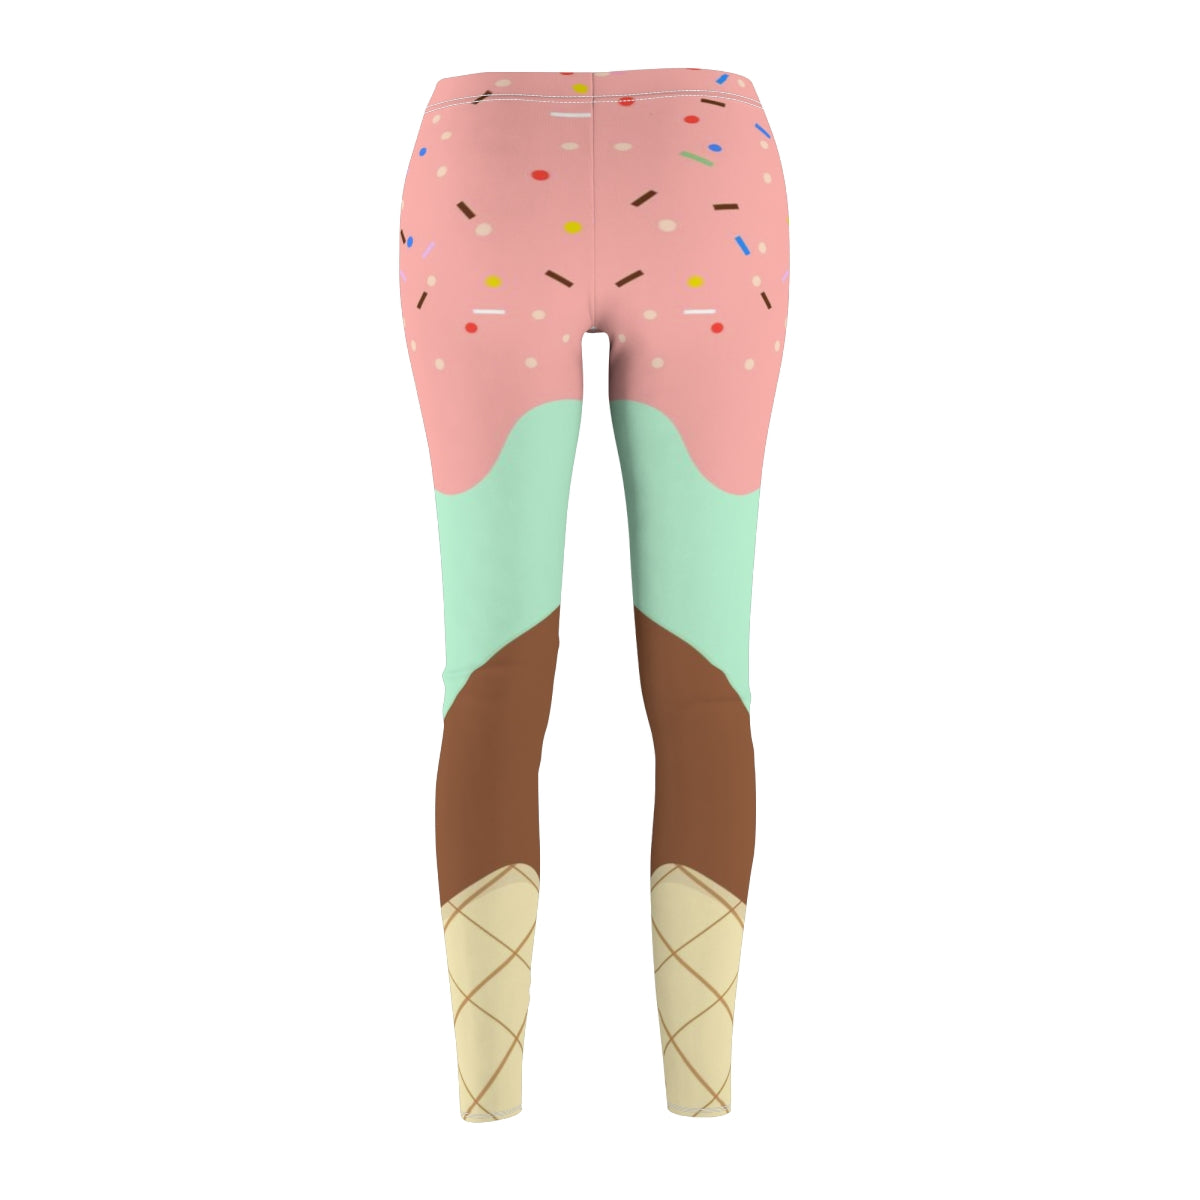 Three Layered Ice Cream Cone Womens Yoga Pants